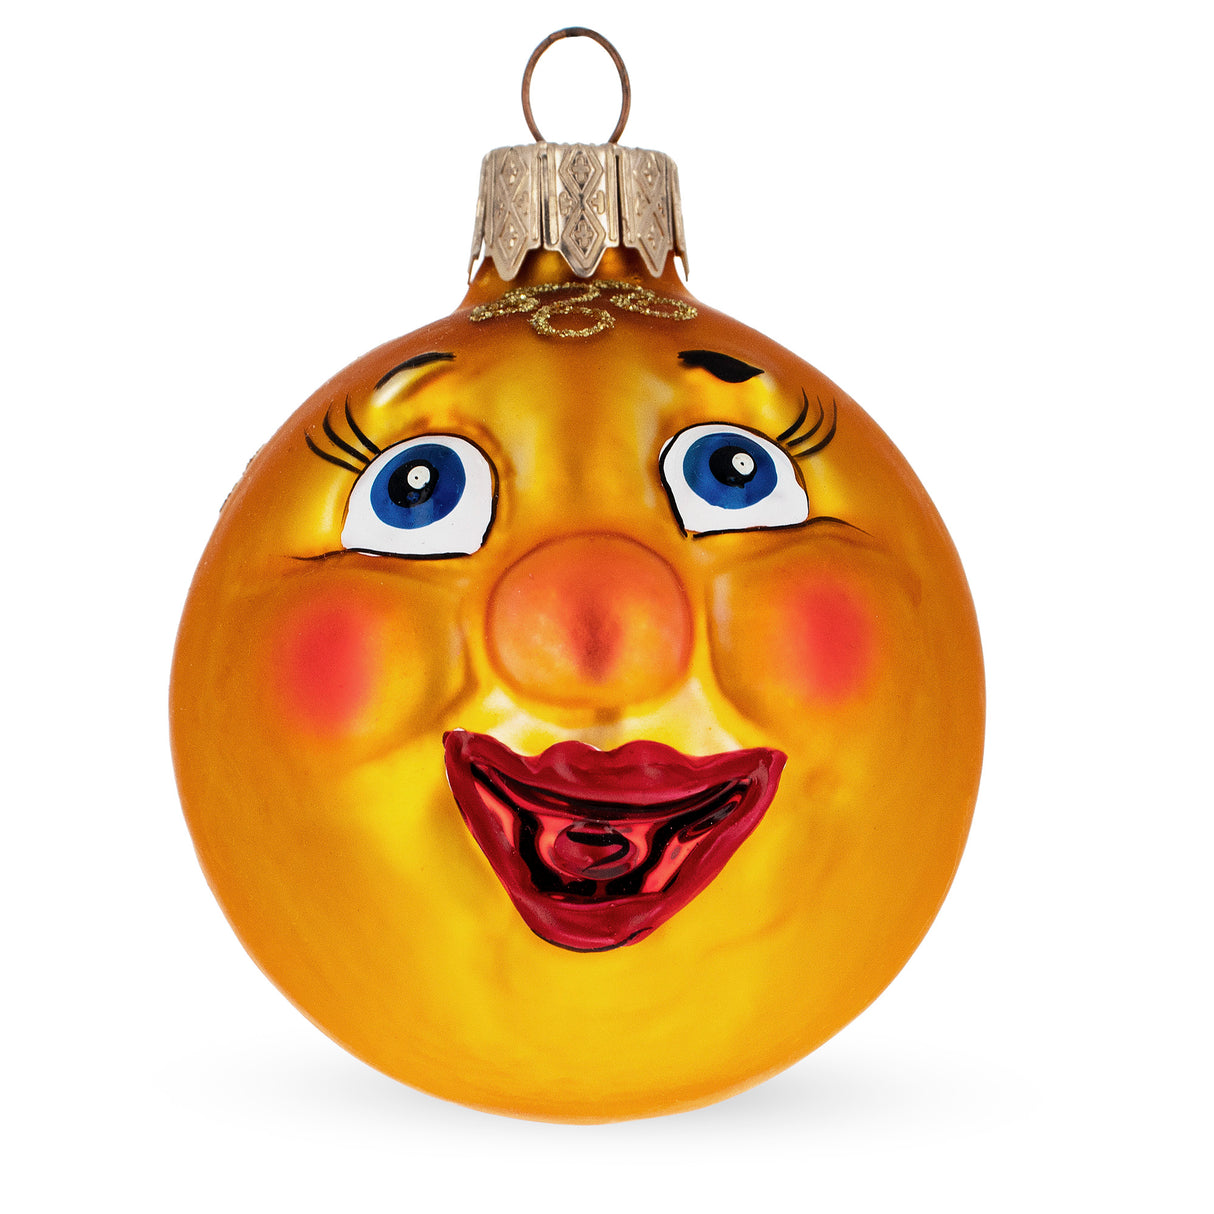 Glass Kolobok, the Folk Tale Hero, Glass Christmas Ornament in Orange color Round